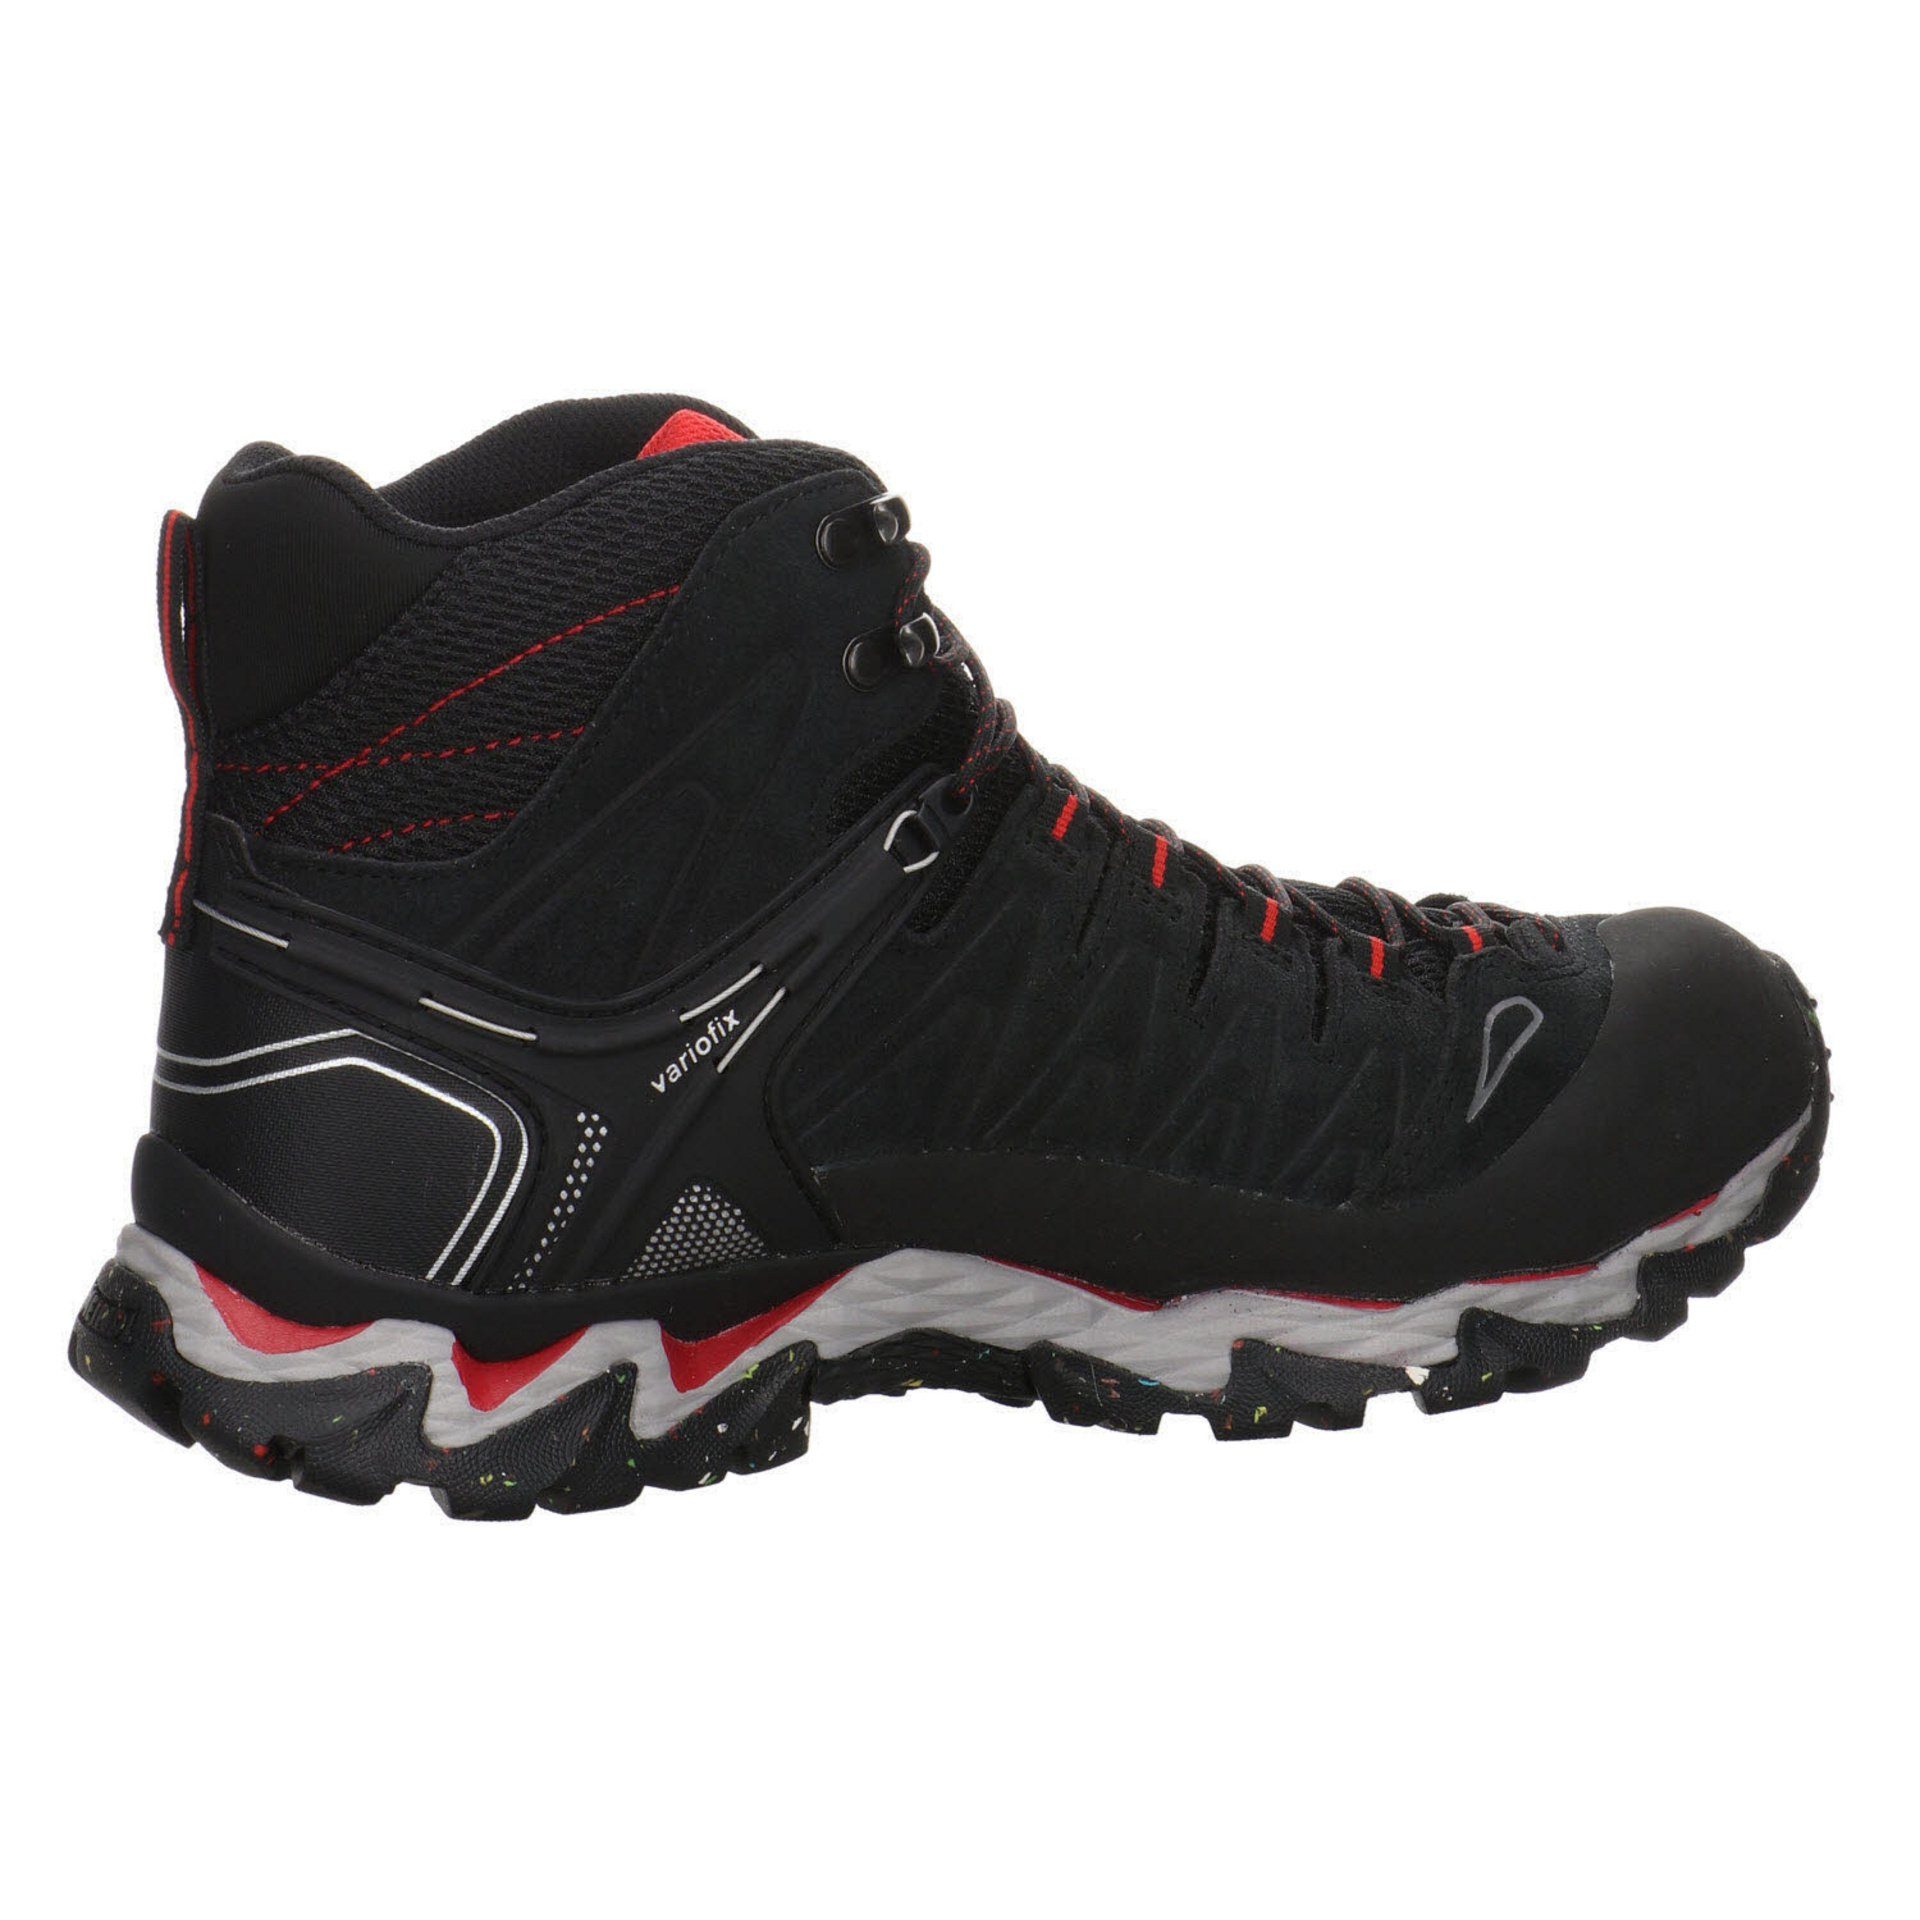 GTX SCHWARZ/ROT Outdoorschuh Hike Herren Lite Outdoorschuh Meindl Outdoor Schuhe Leder-/Textilkombination